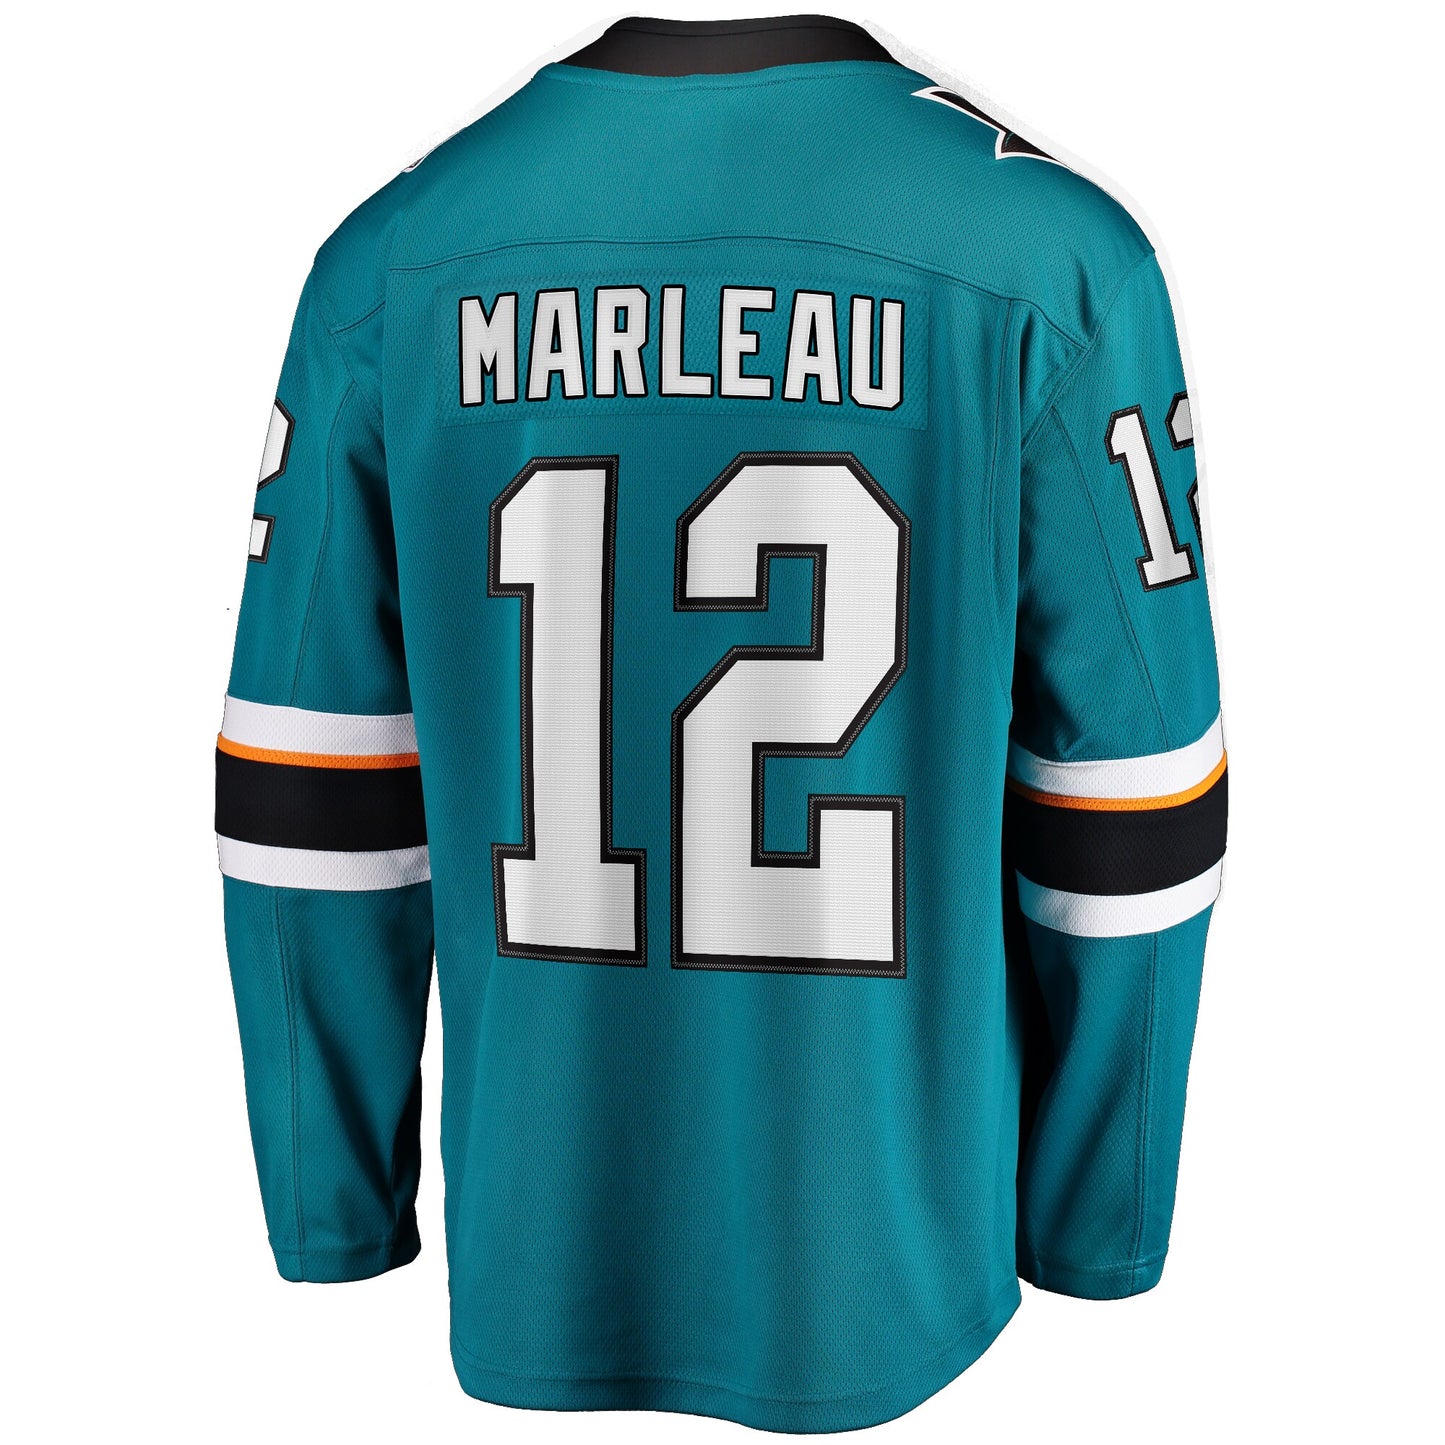 Patrick Marleau San Jose Sharks Fanatics Branded Replica Player Jersey - Teal